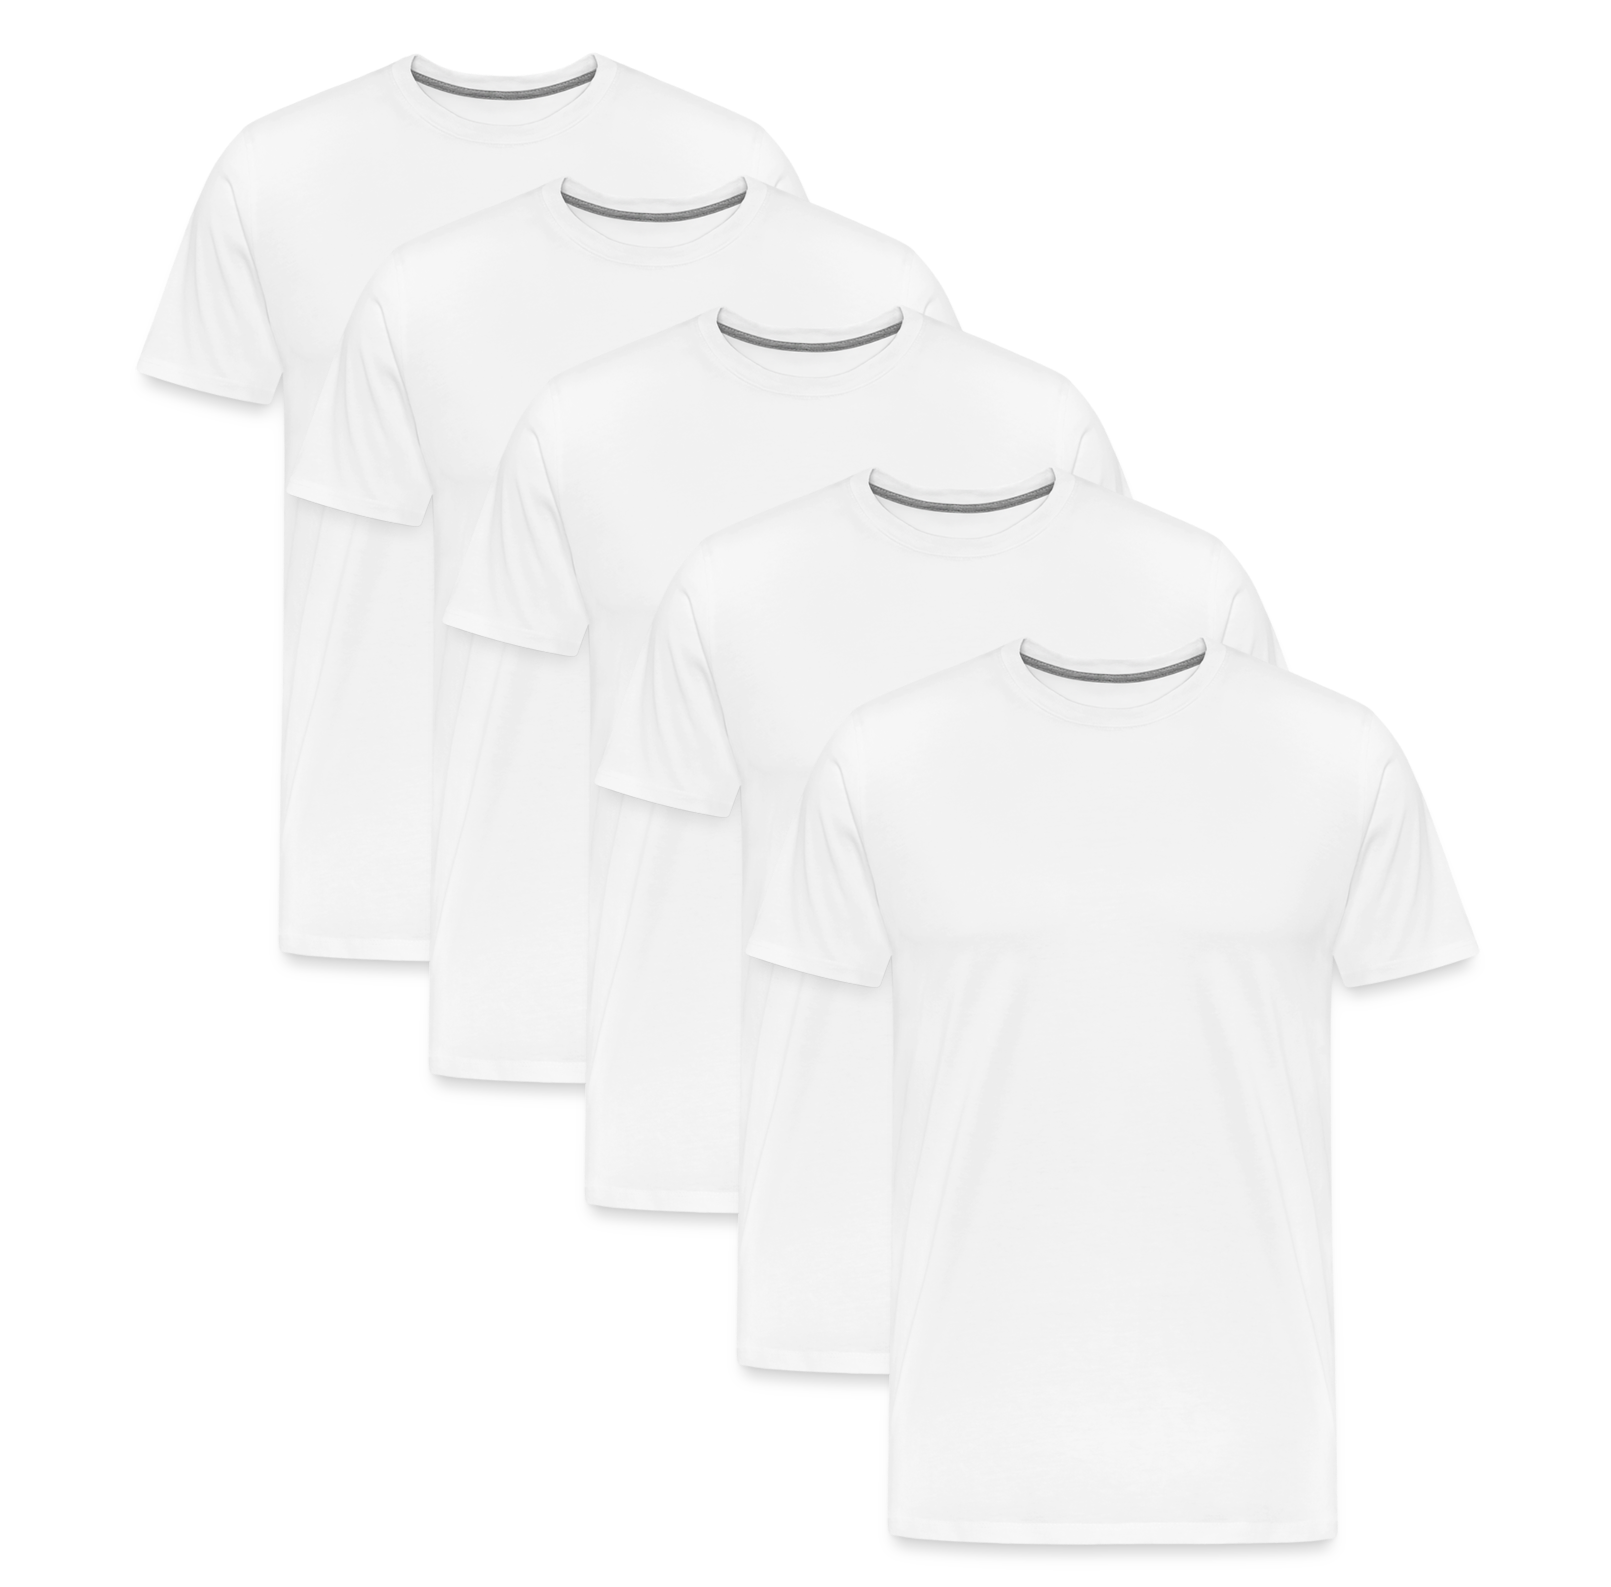 Fluent Tee 5-Pack - Men's Premium T-Shirt from fluentclothing.com